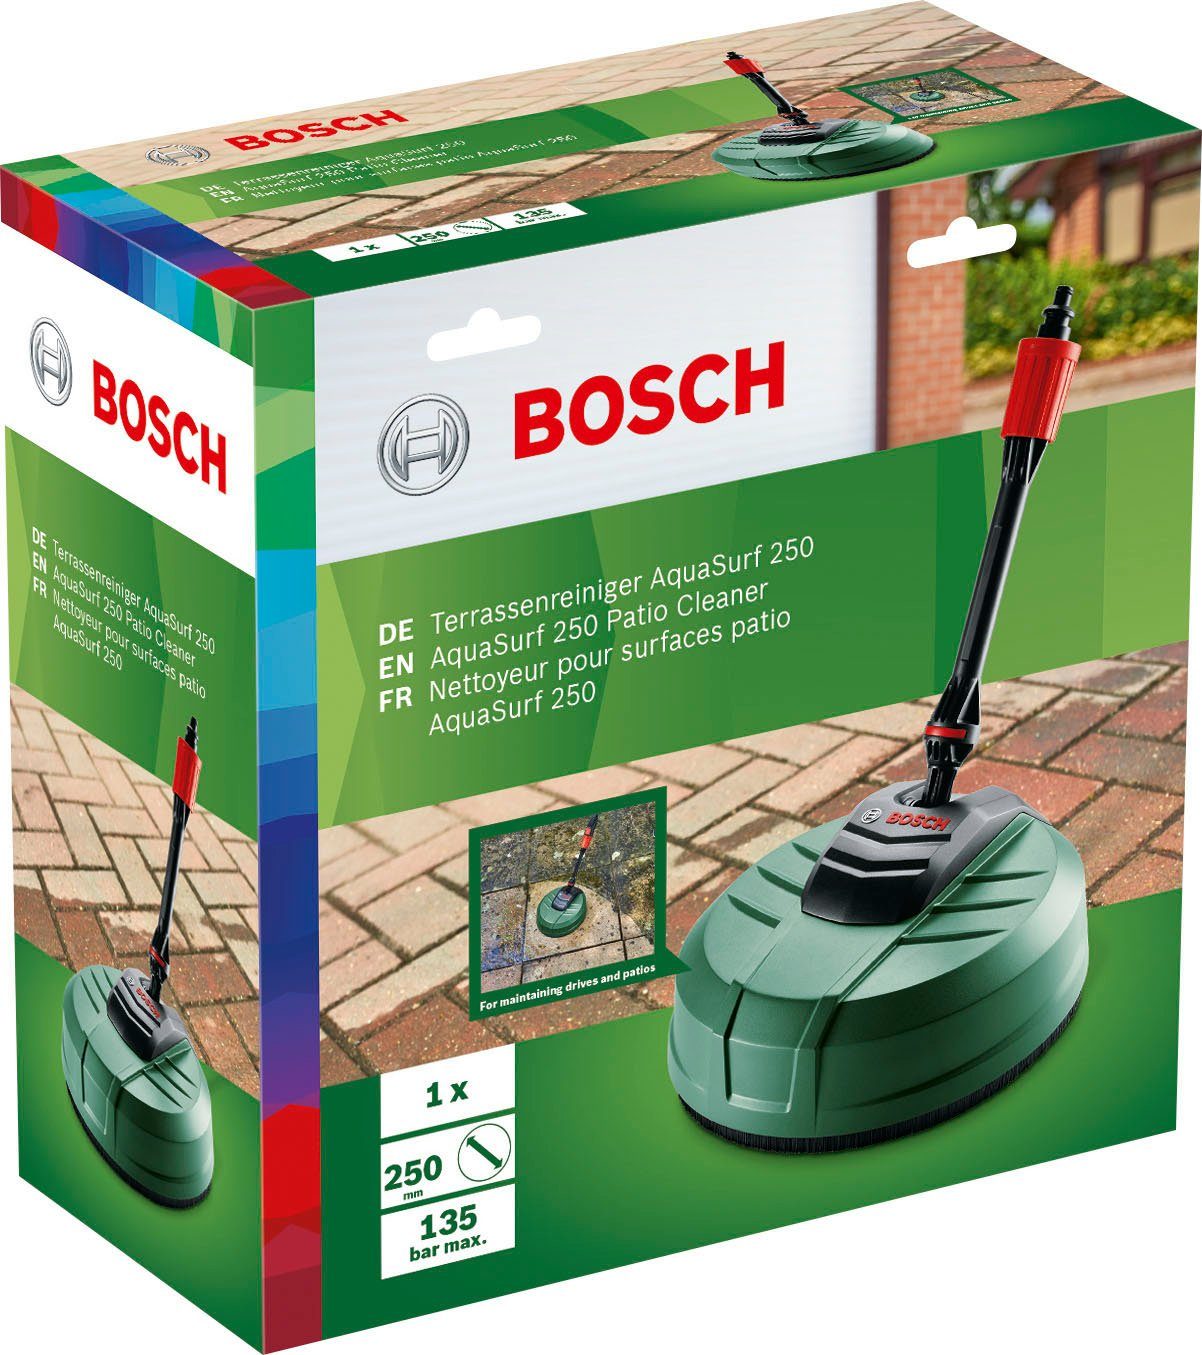 & Home Terrassenreiniger Aquasurf Flächenreiniger 250 Bosch Garden